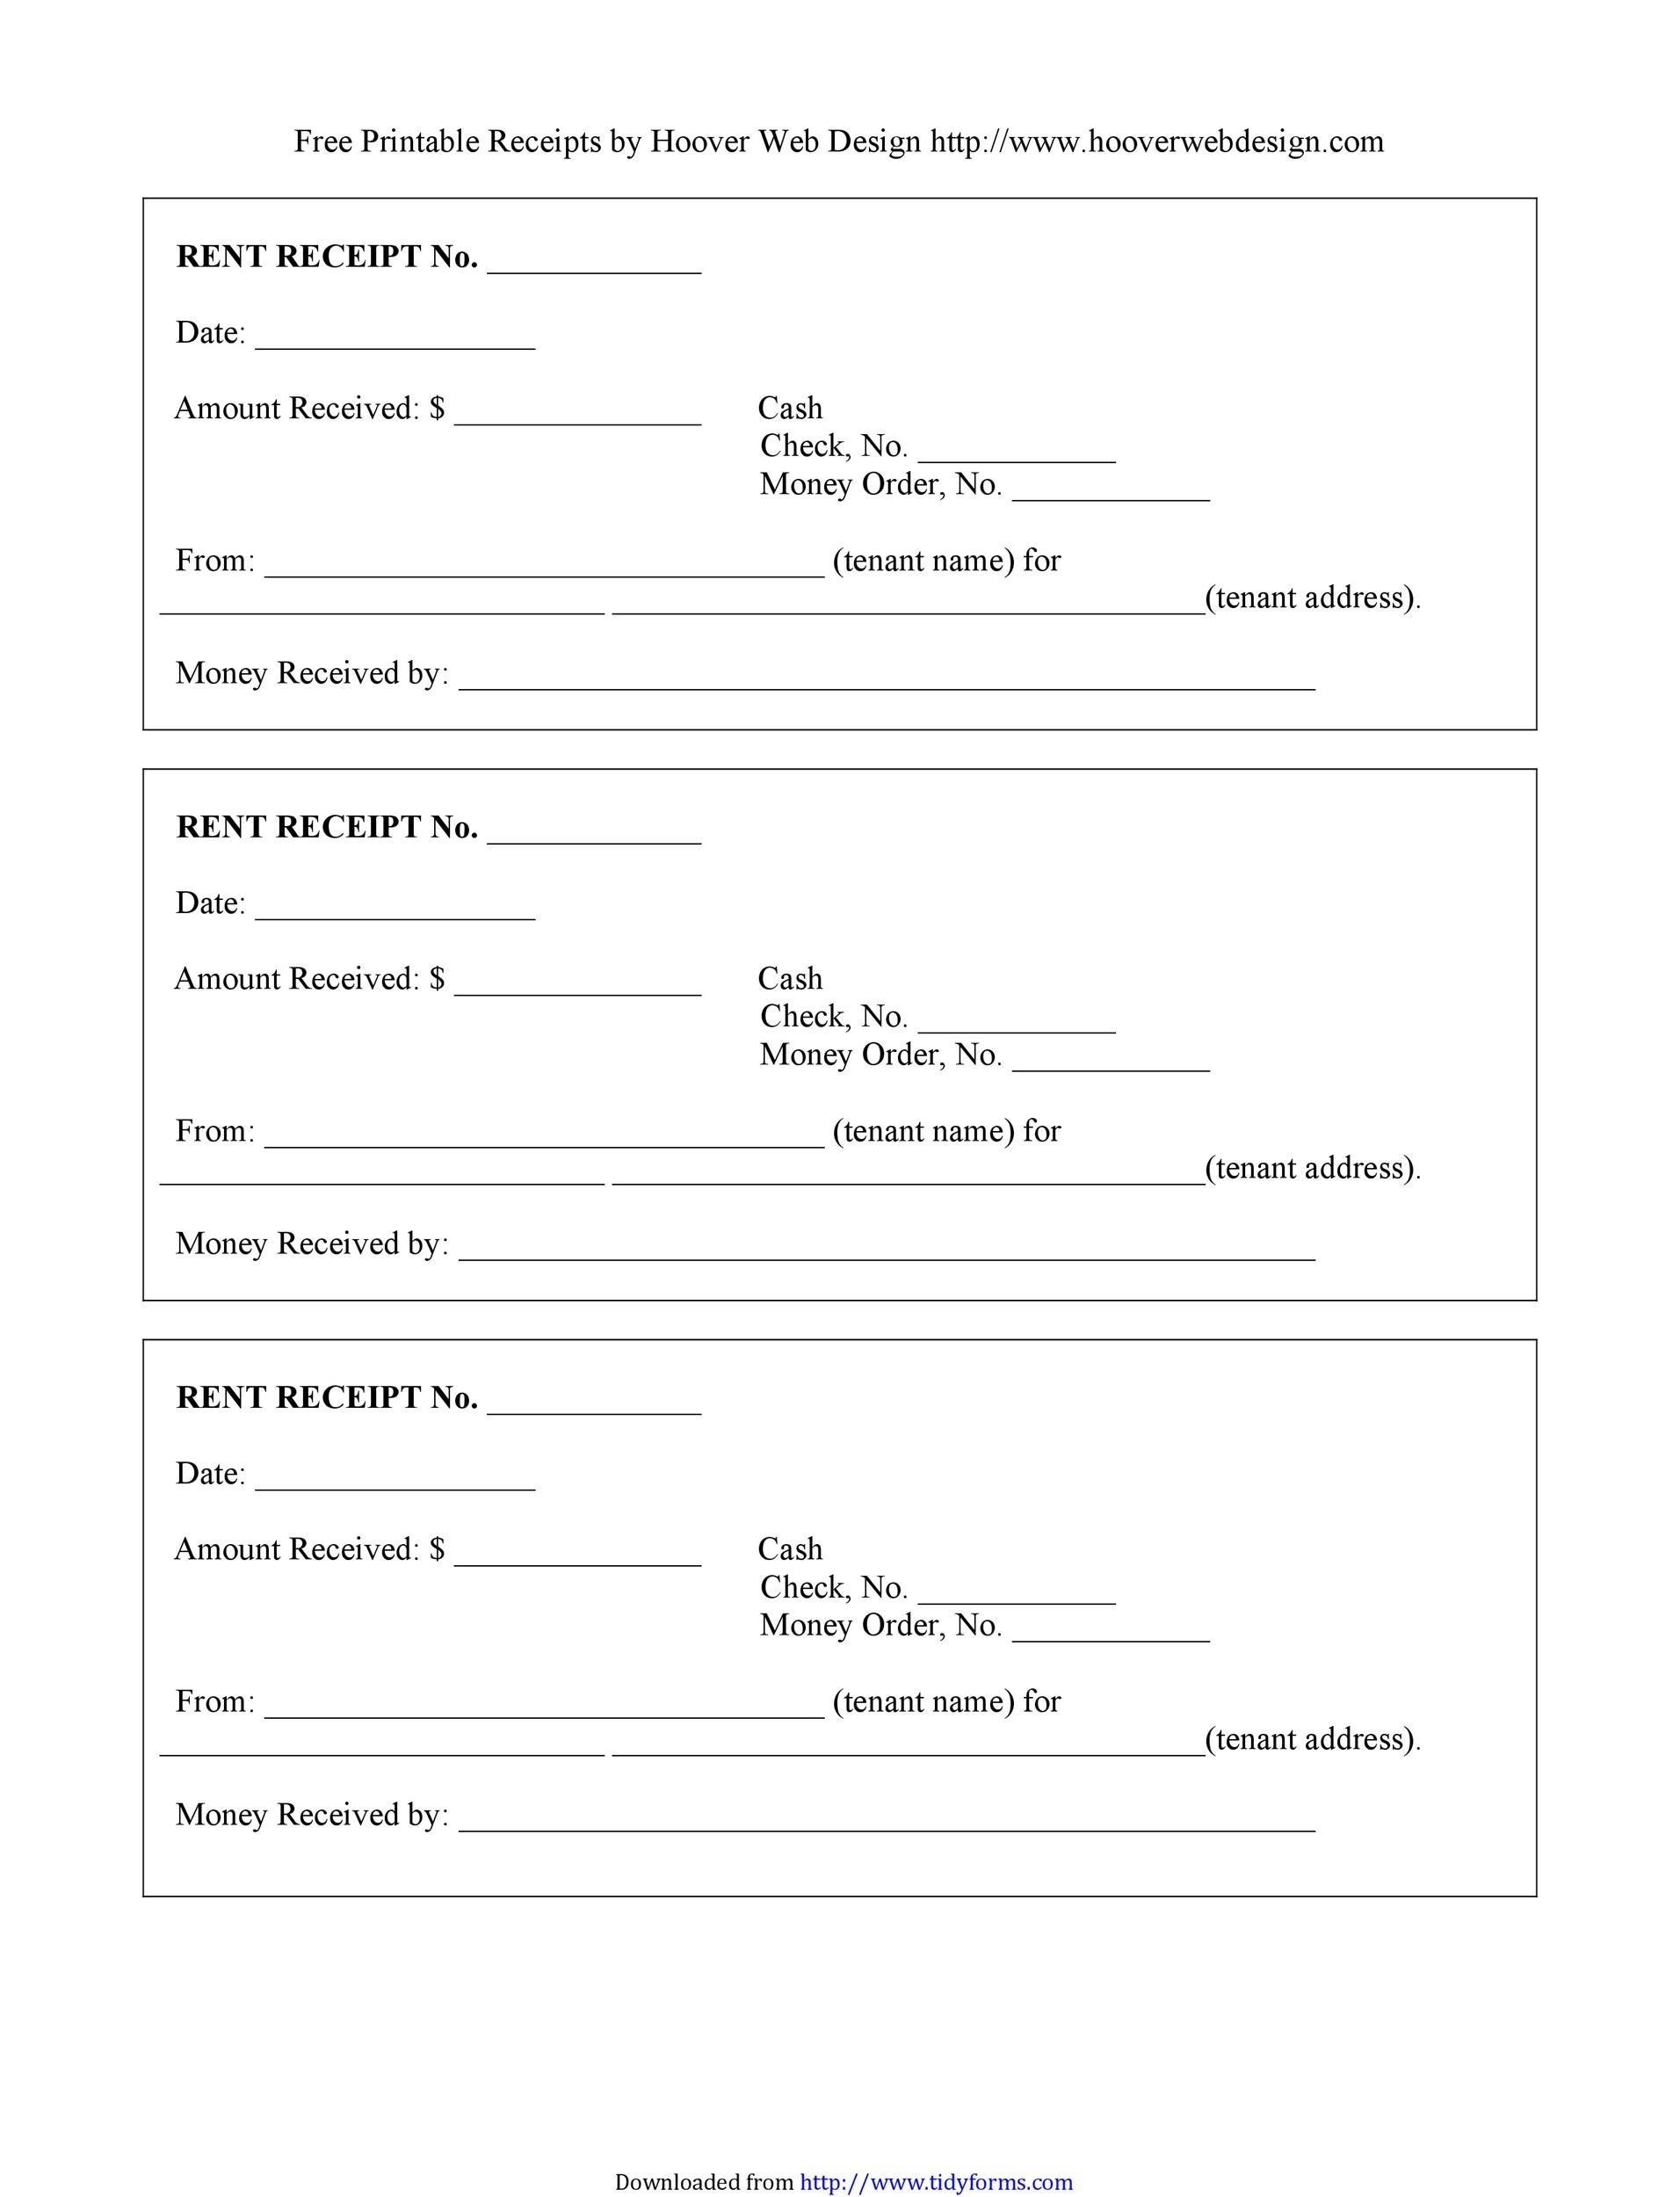 free-printable-rent-receipts-template-printable-templates